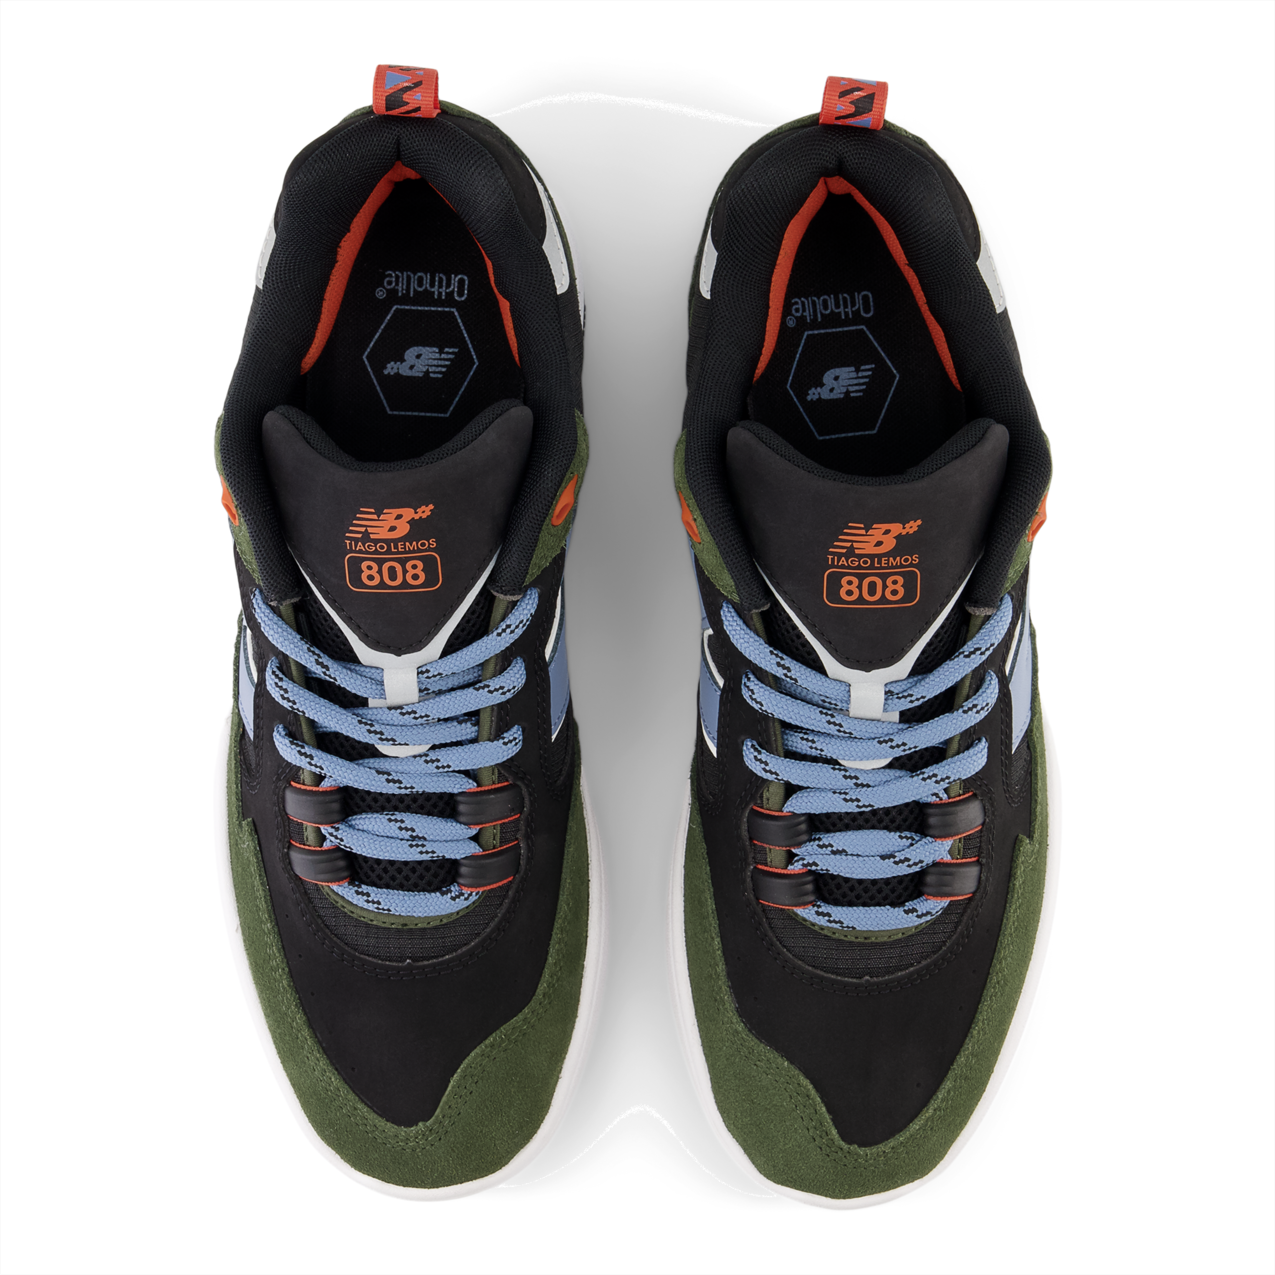 New Balance Numeric Men's Tiago Lemos 808 Forest Green Black Shoes